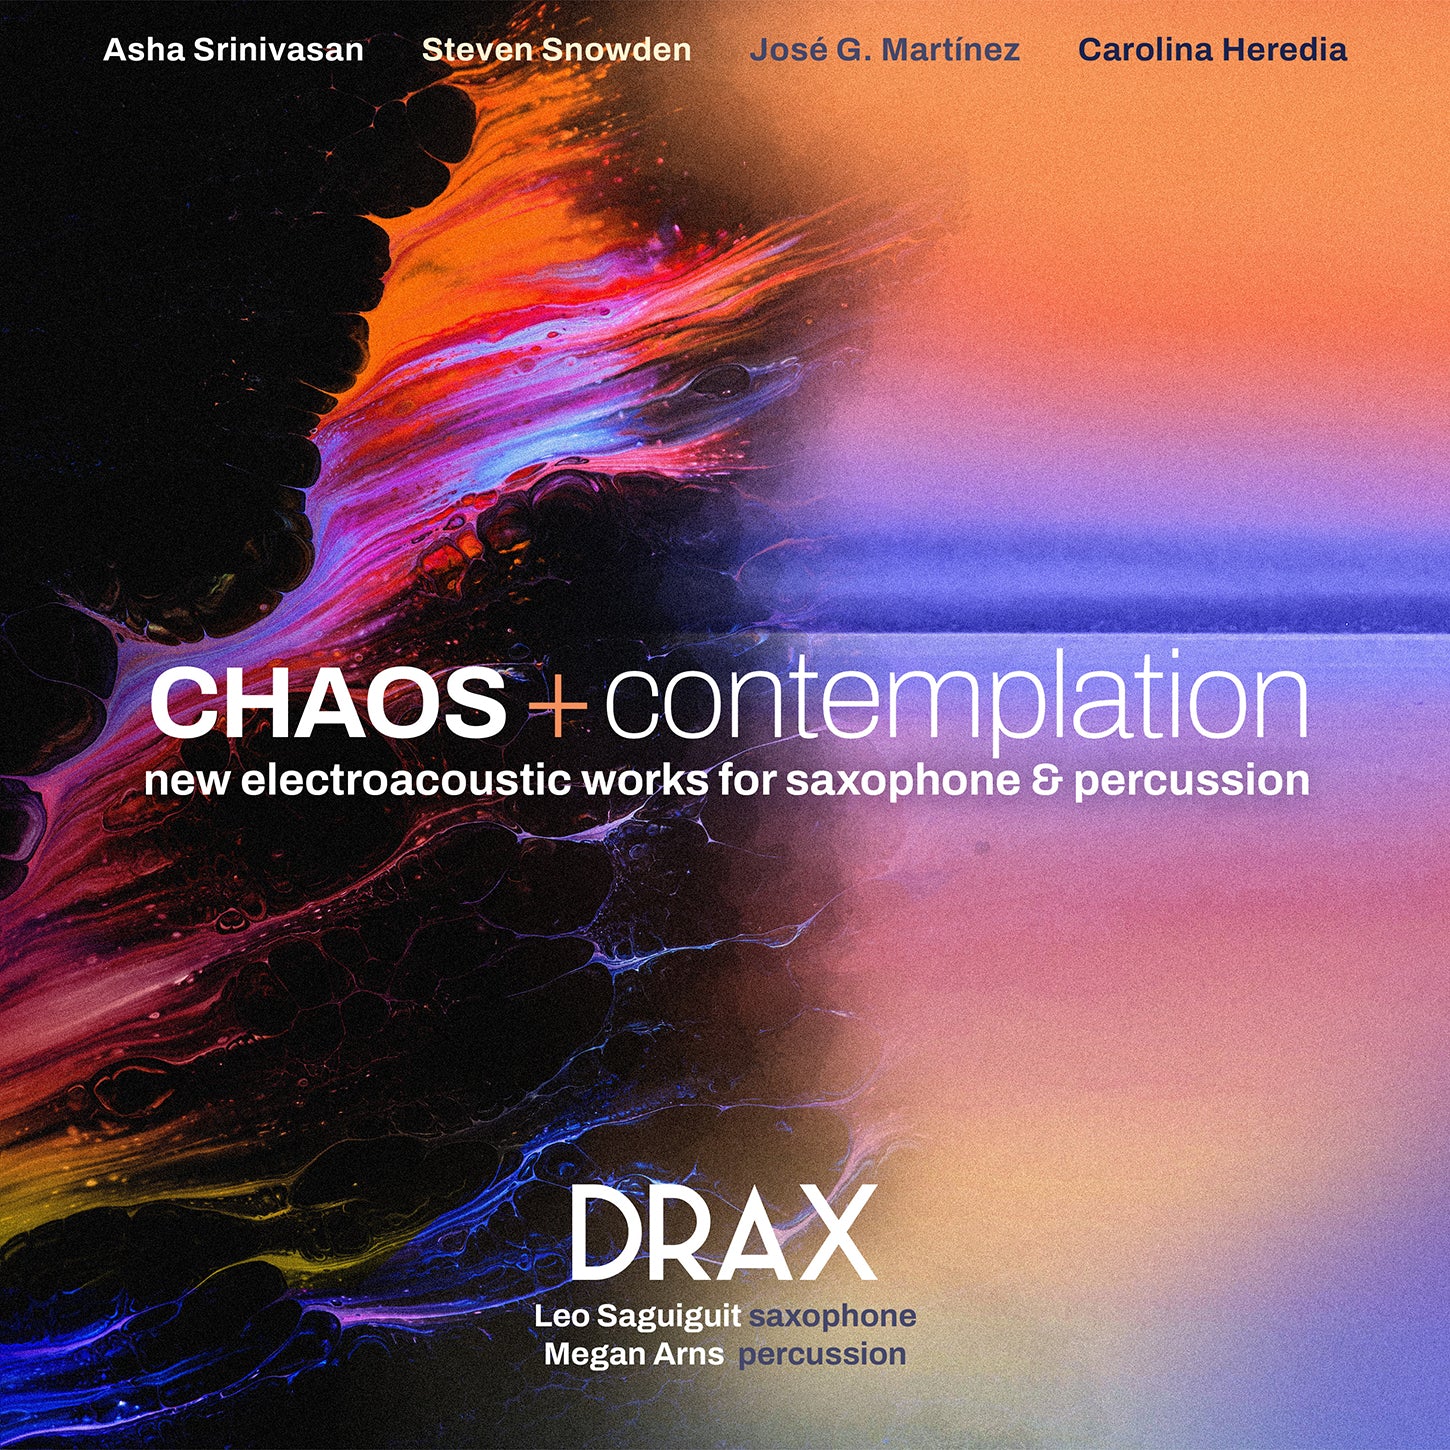 Heredia, Martínez, Snowden & Srinivasan: Chaos + Contemplation / DRAX